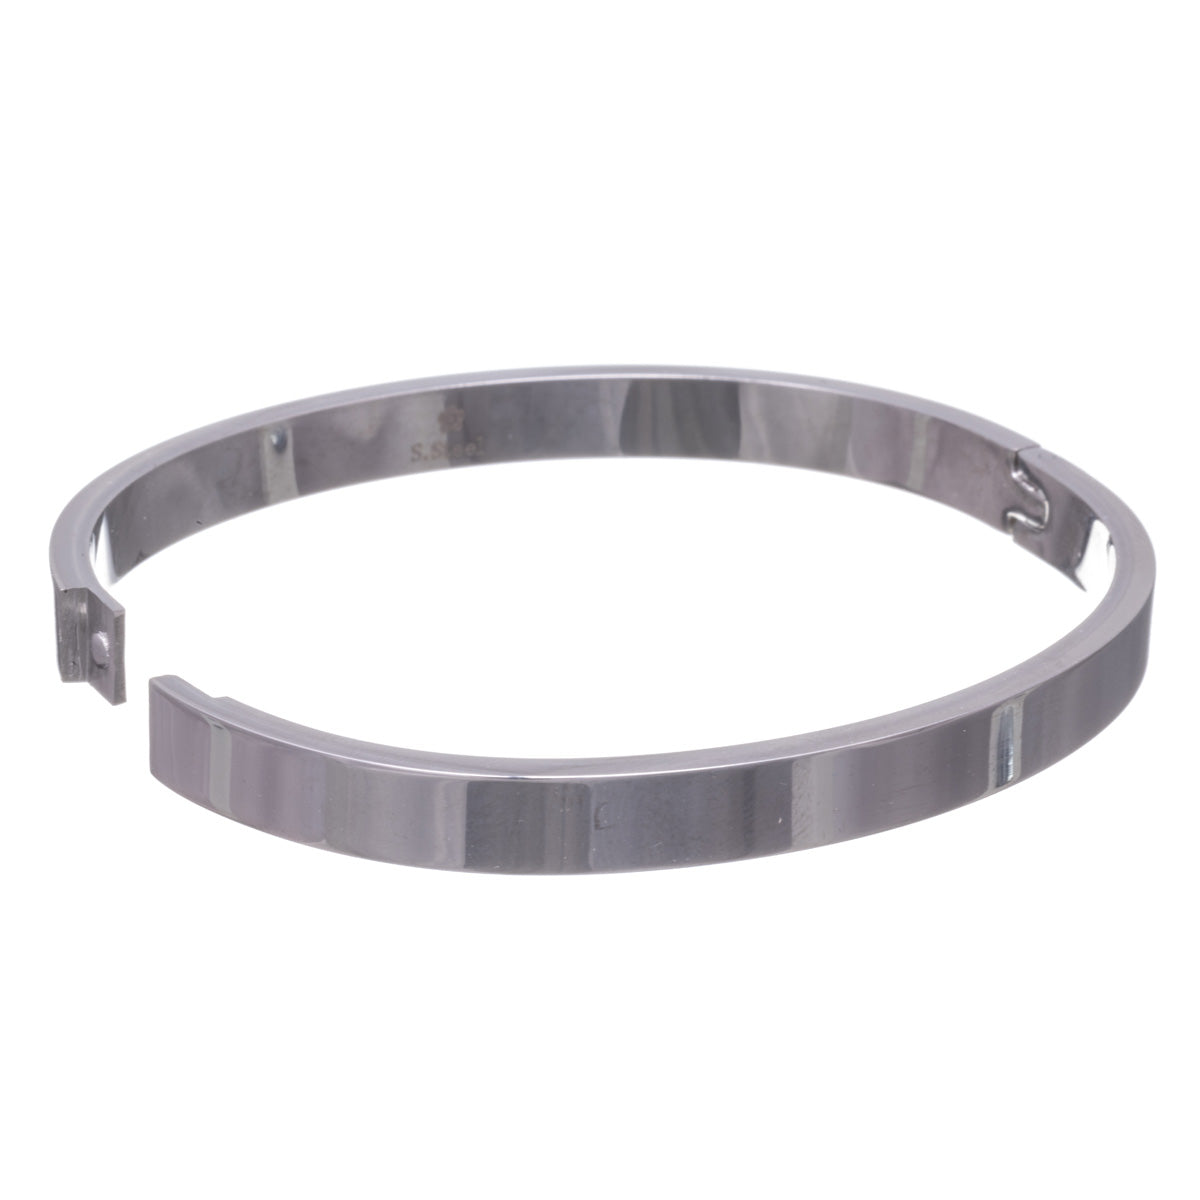 Flat steel bracelet with hinge